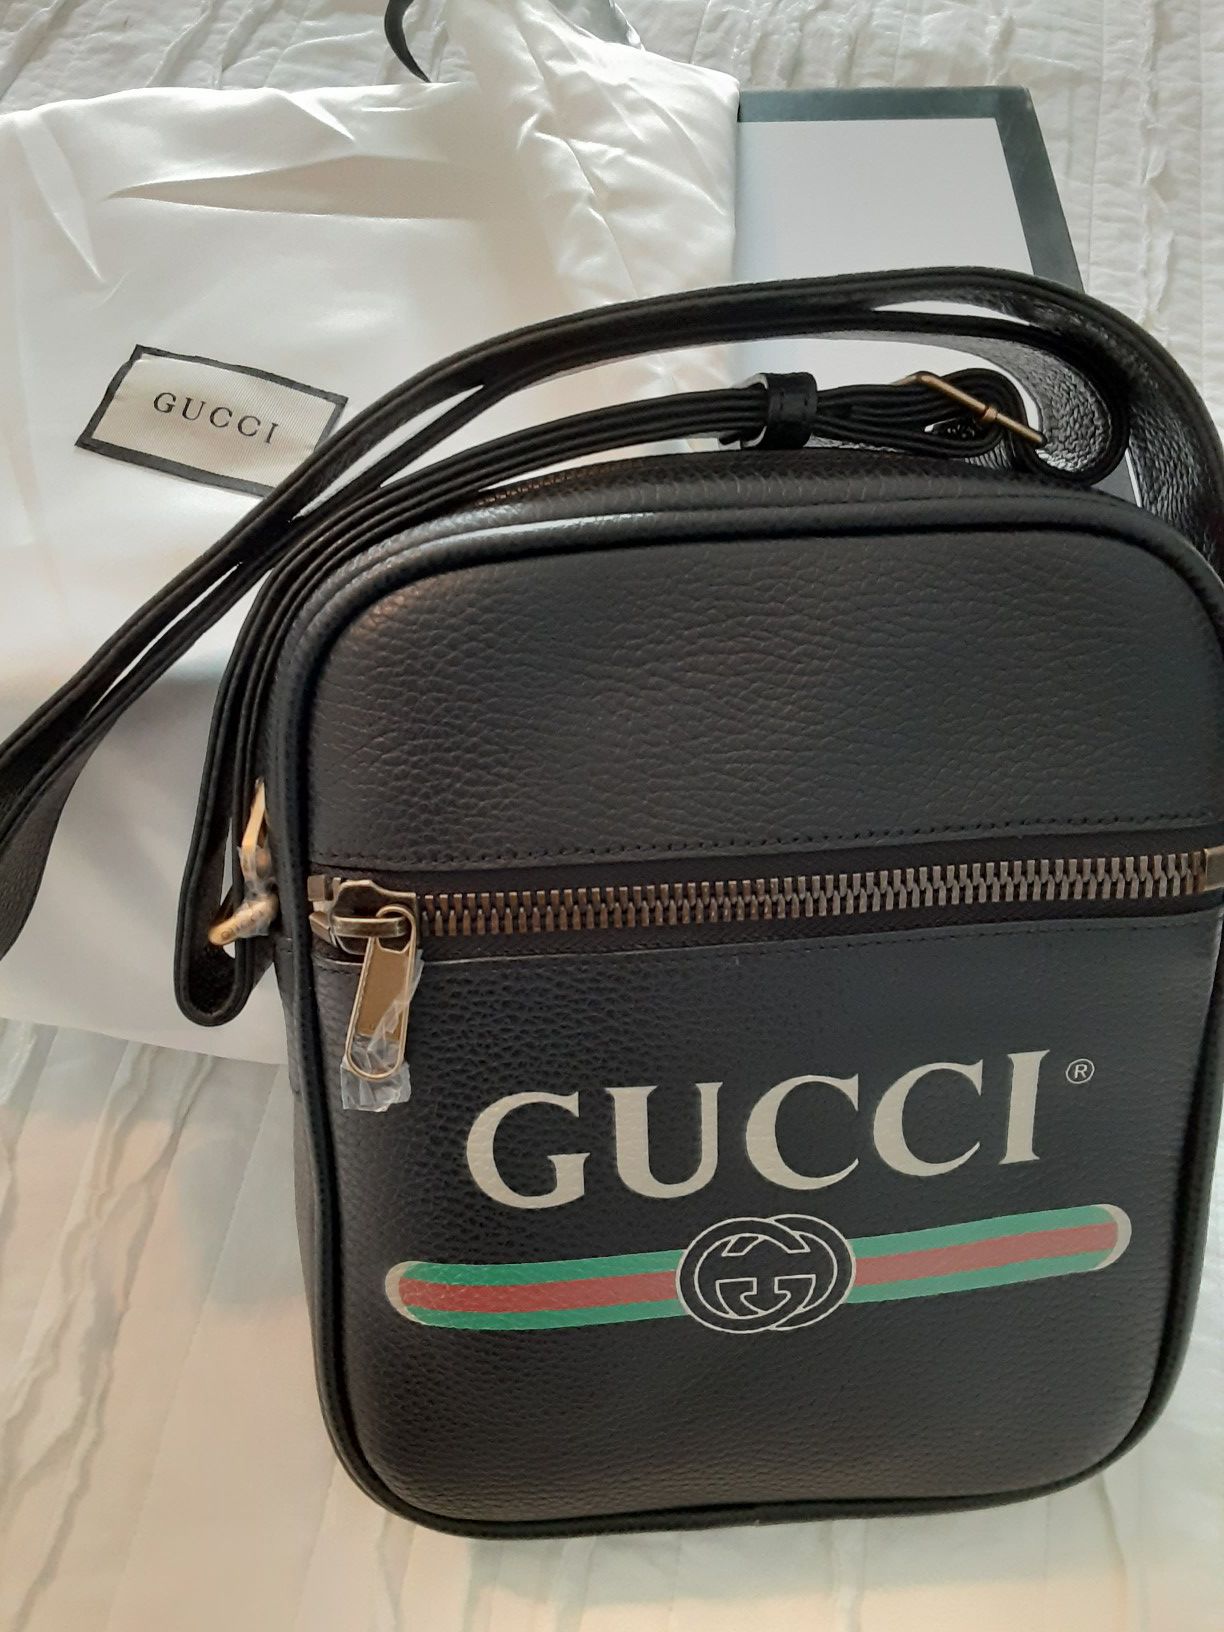 Gucci Messenger Bag NEW